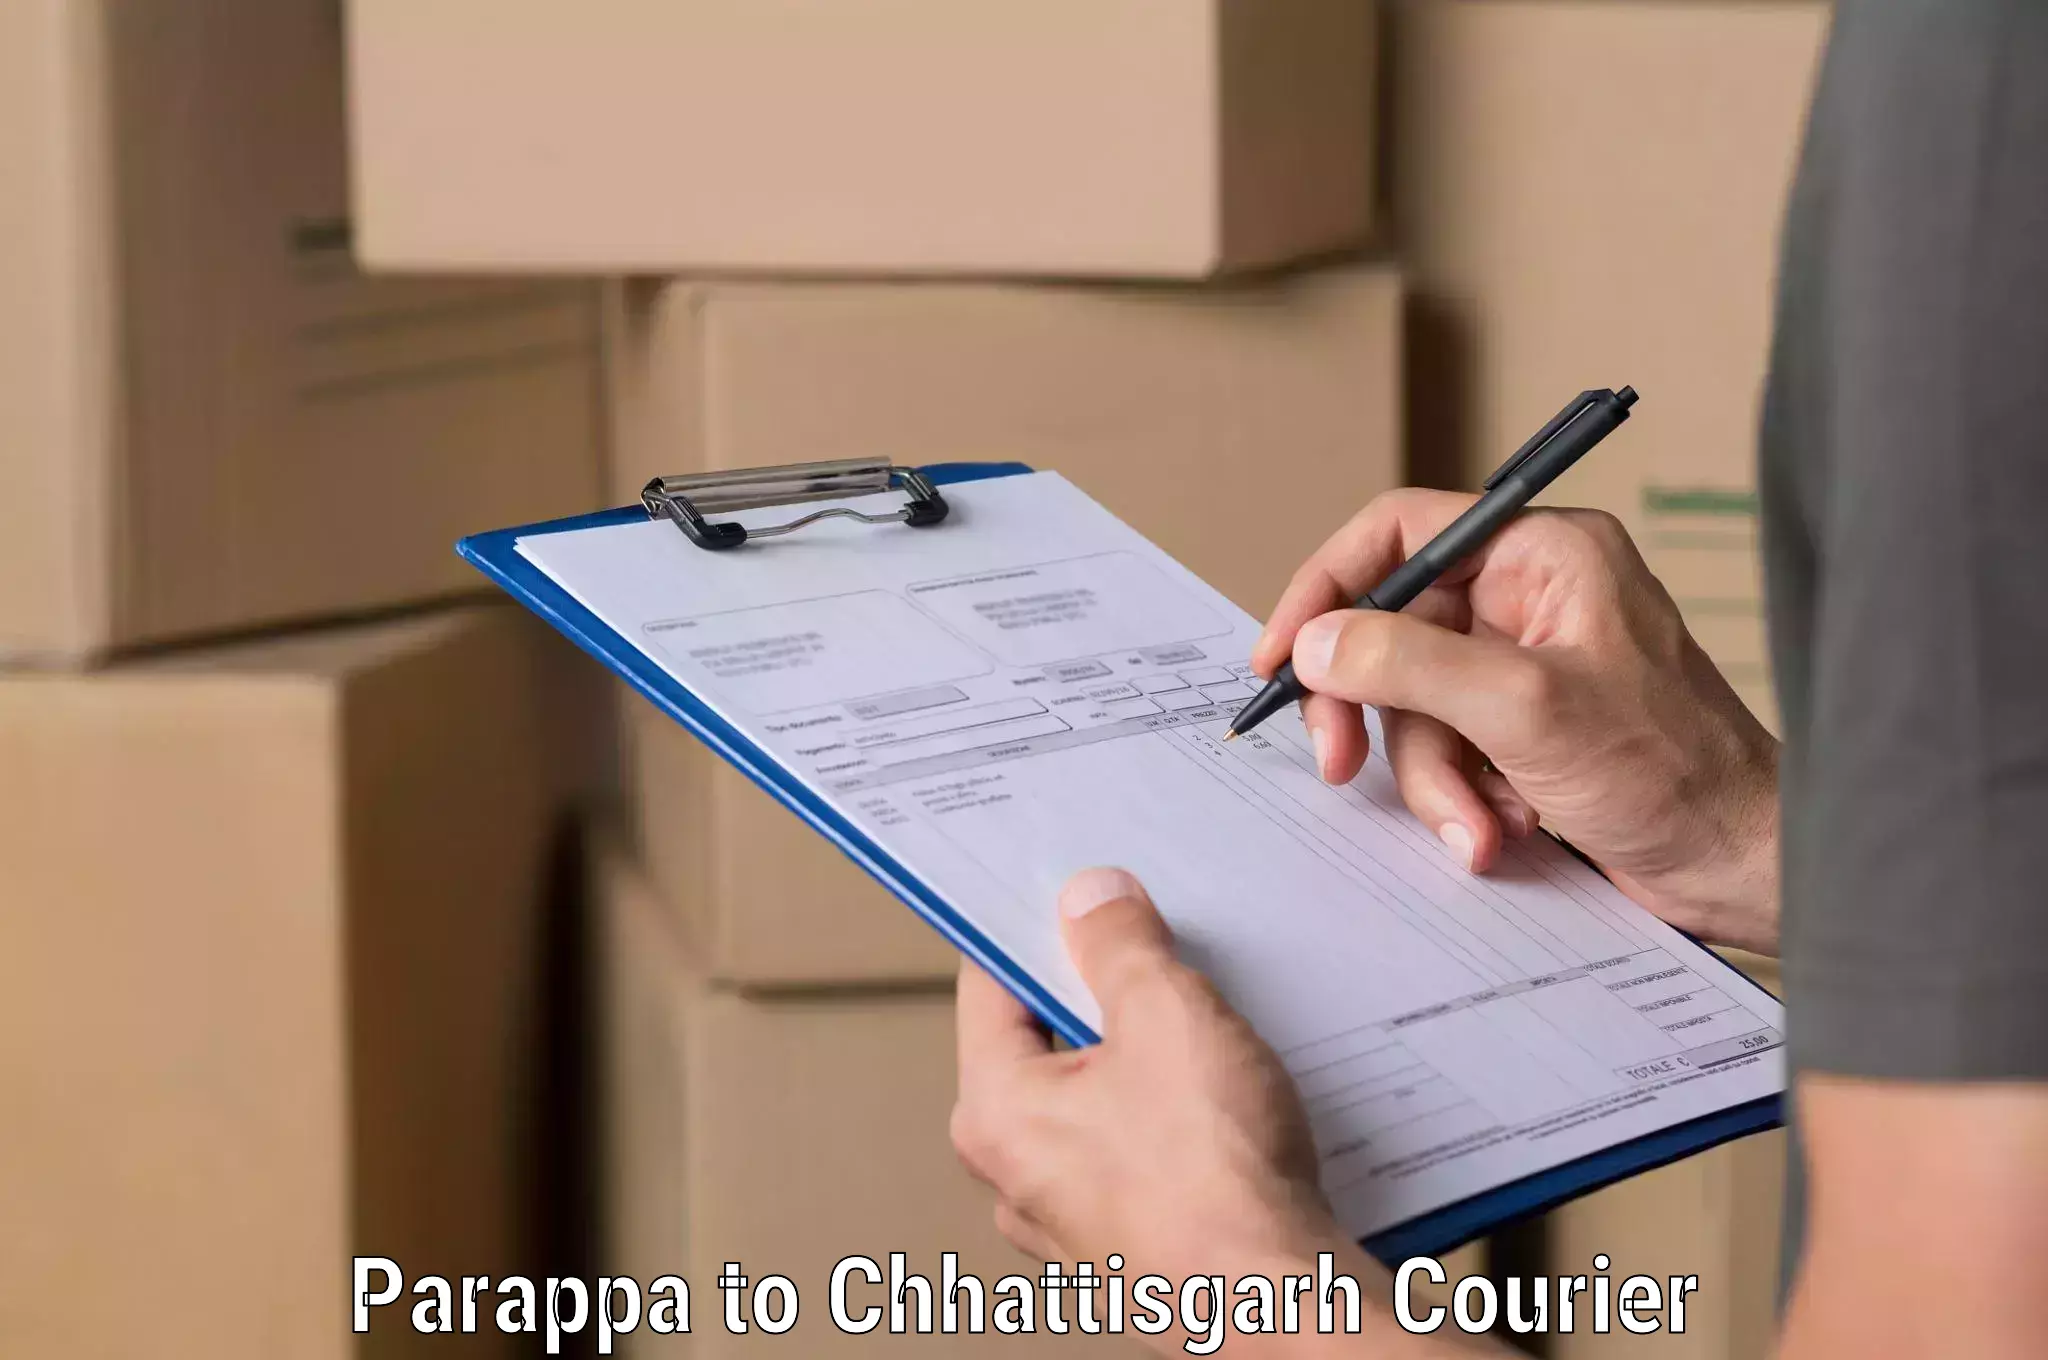 24-hour courier service Parappa to Patna Chhattisgarh